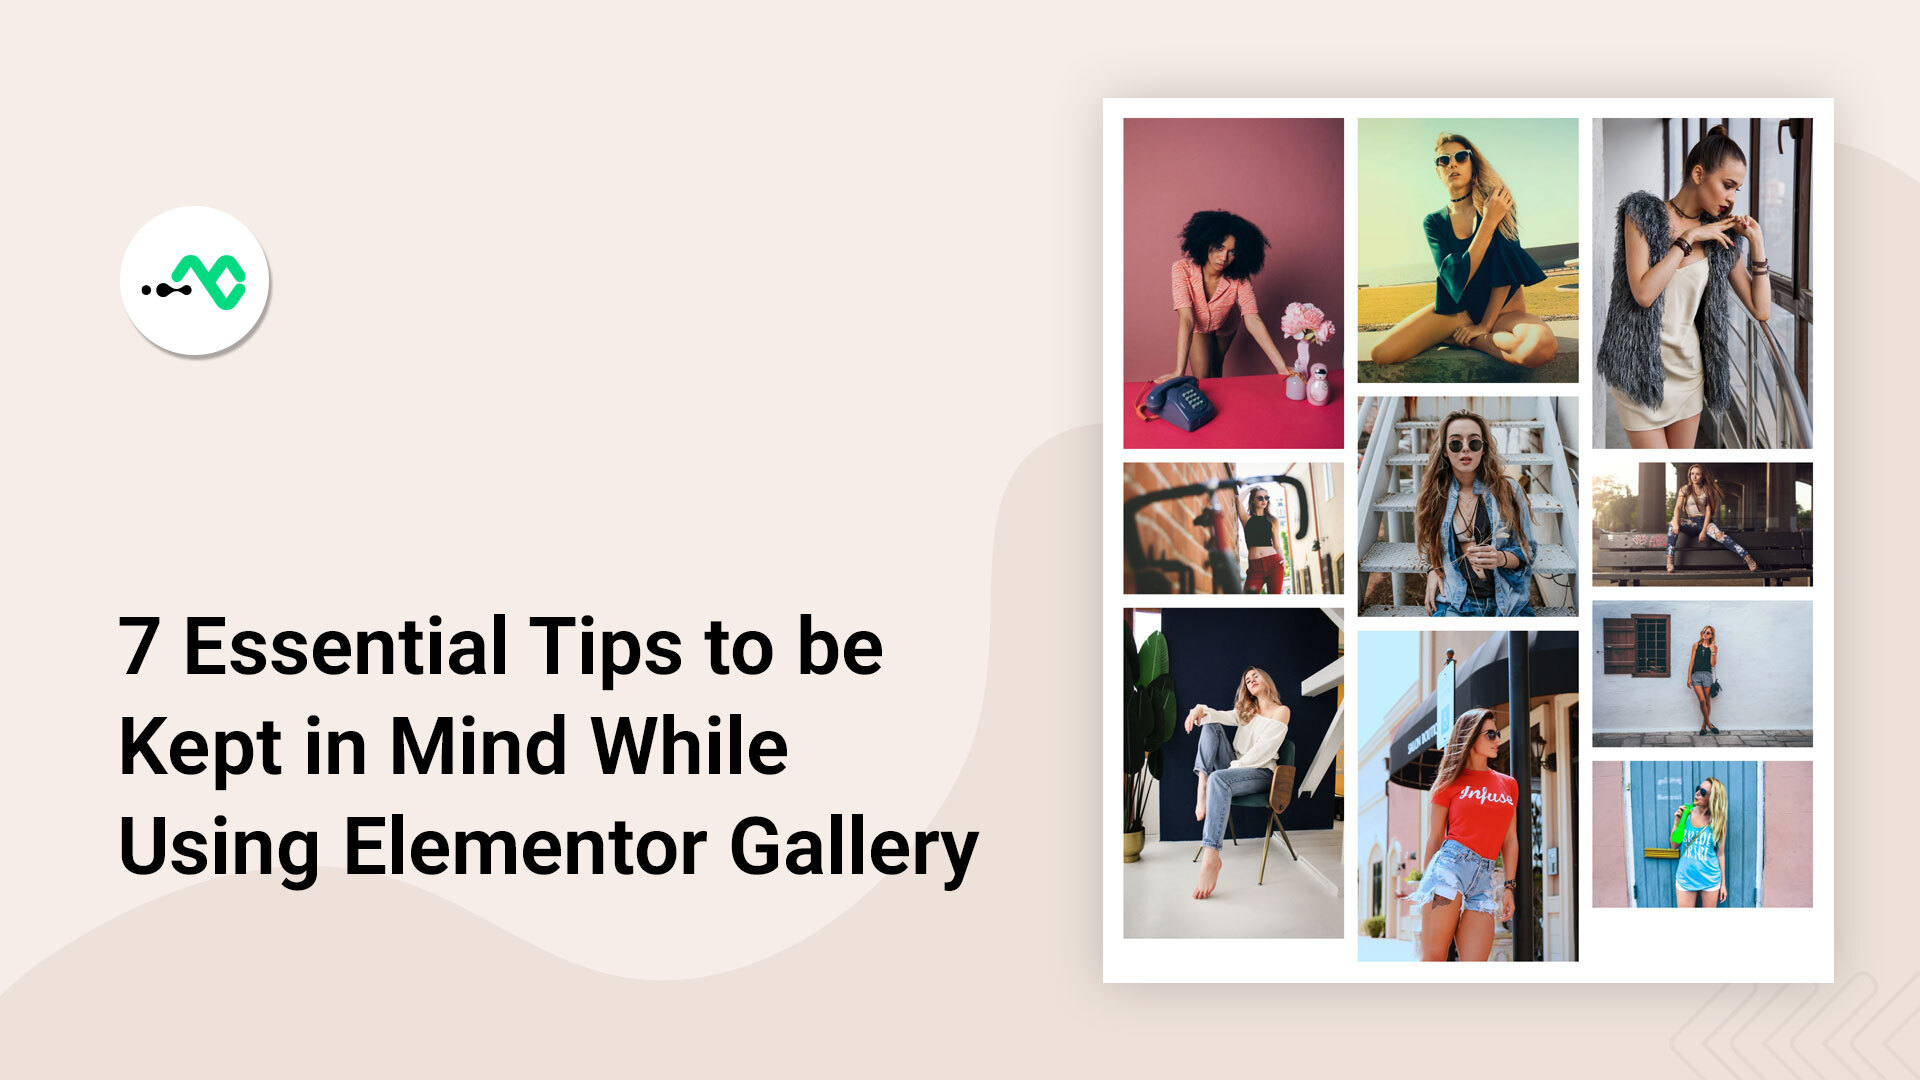 Elementor Gallery Tips